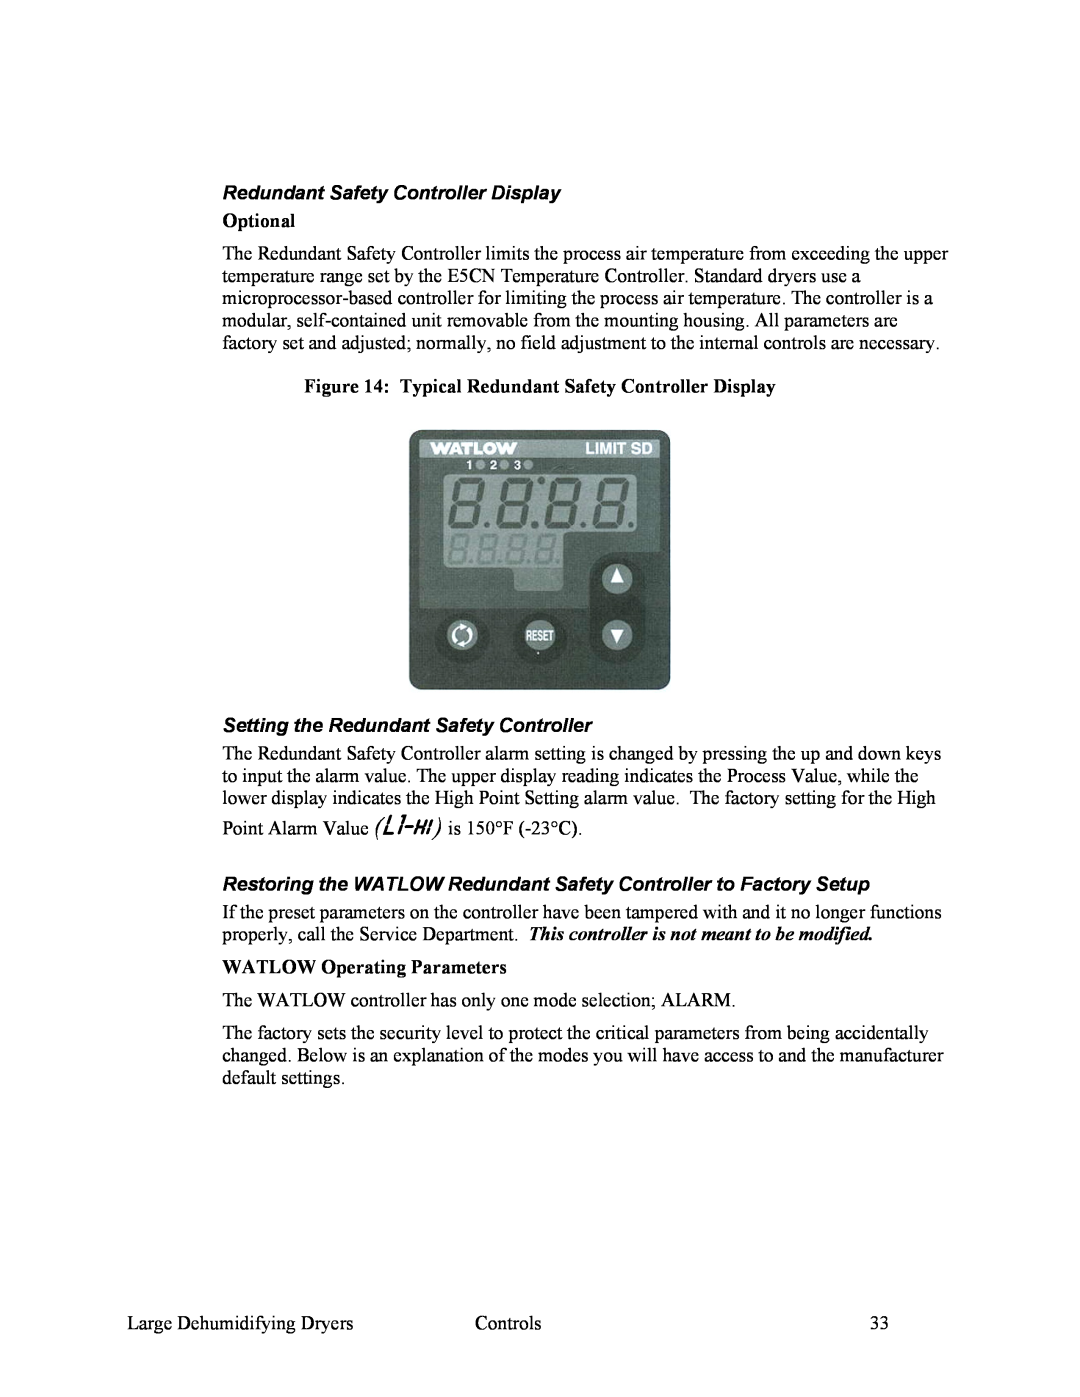 Sterling SDA 1000-5100 Redundant Safety Controller Display, Setting the Redundant Safety Controller, Optional 